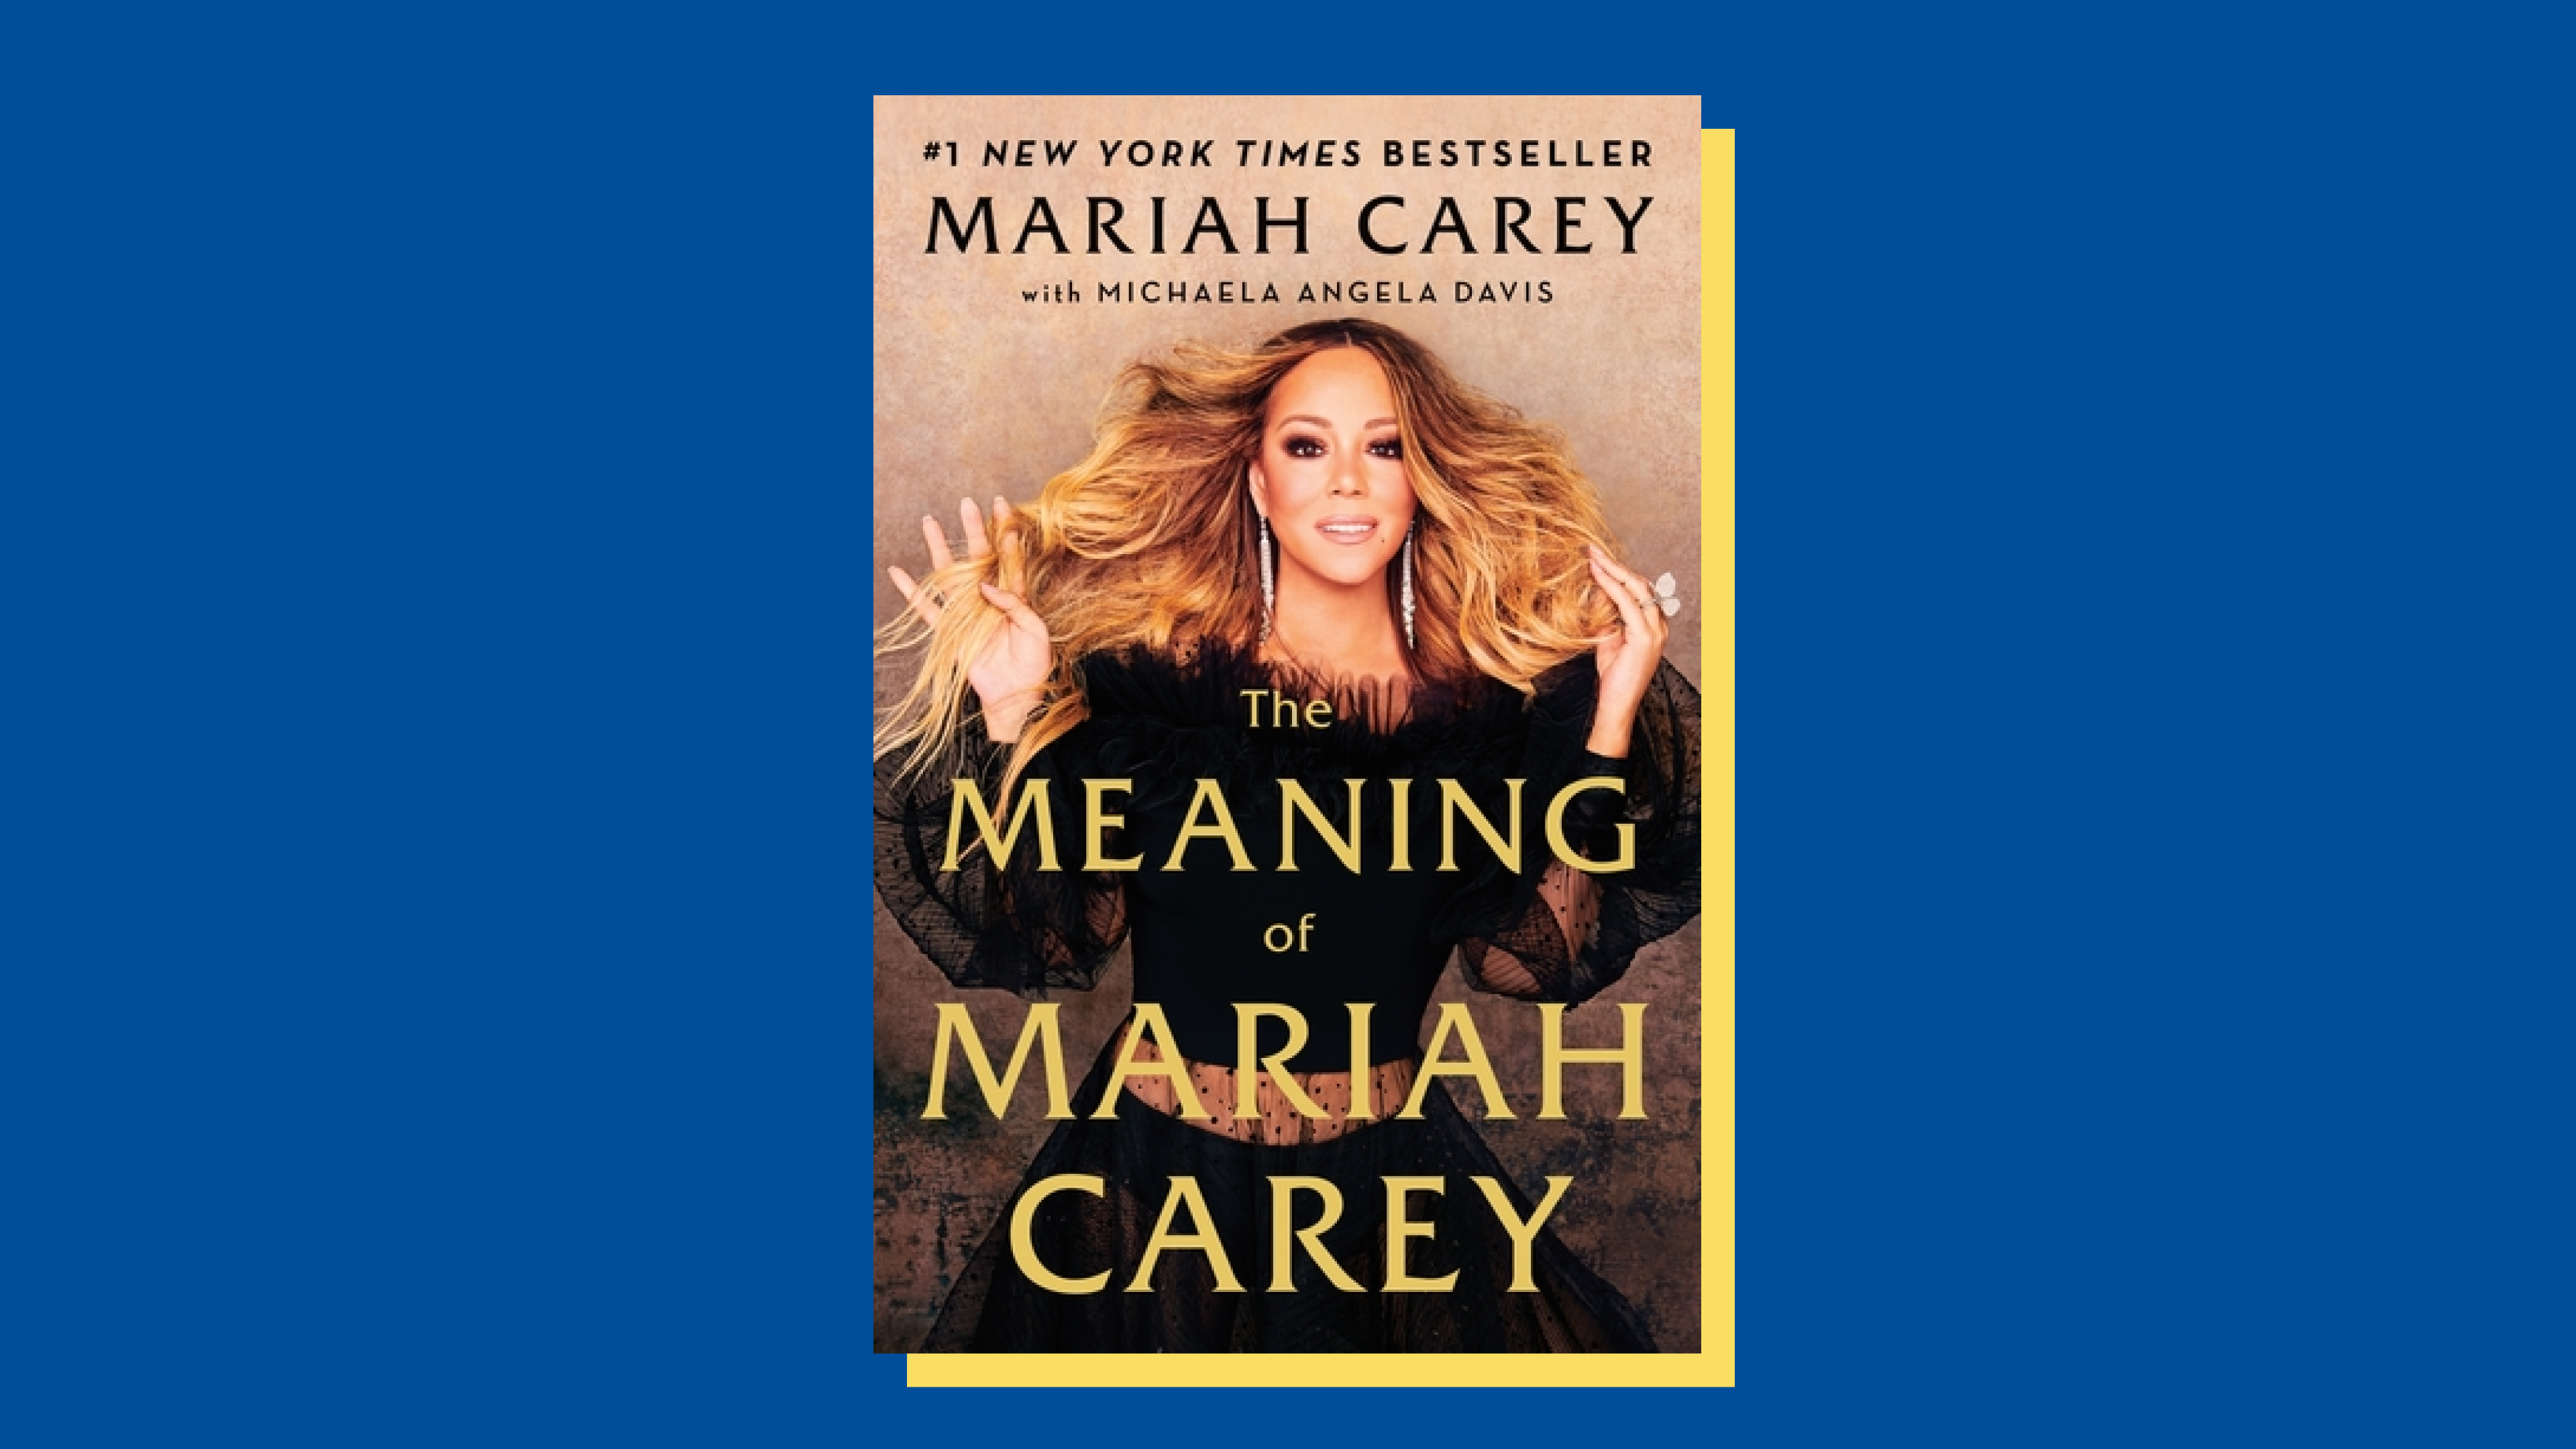 “The Meaning of Mariah Carey” by Mariah Carey, with Michaela Angela Davis